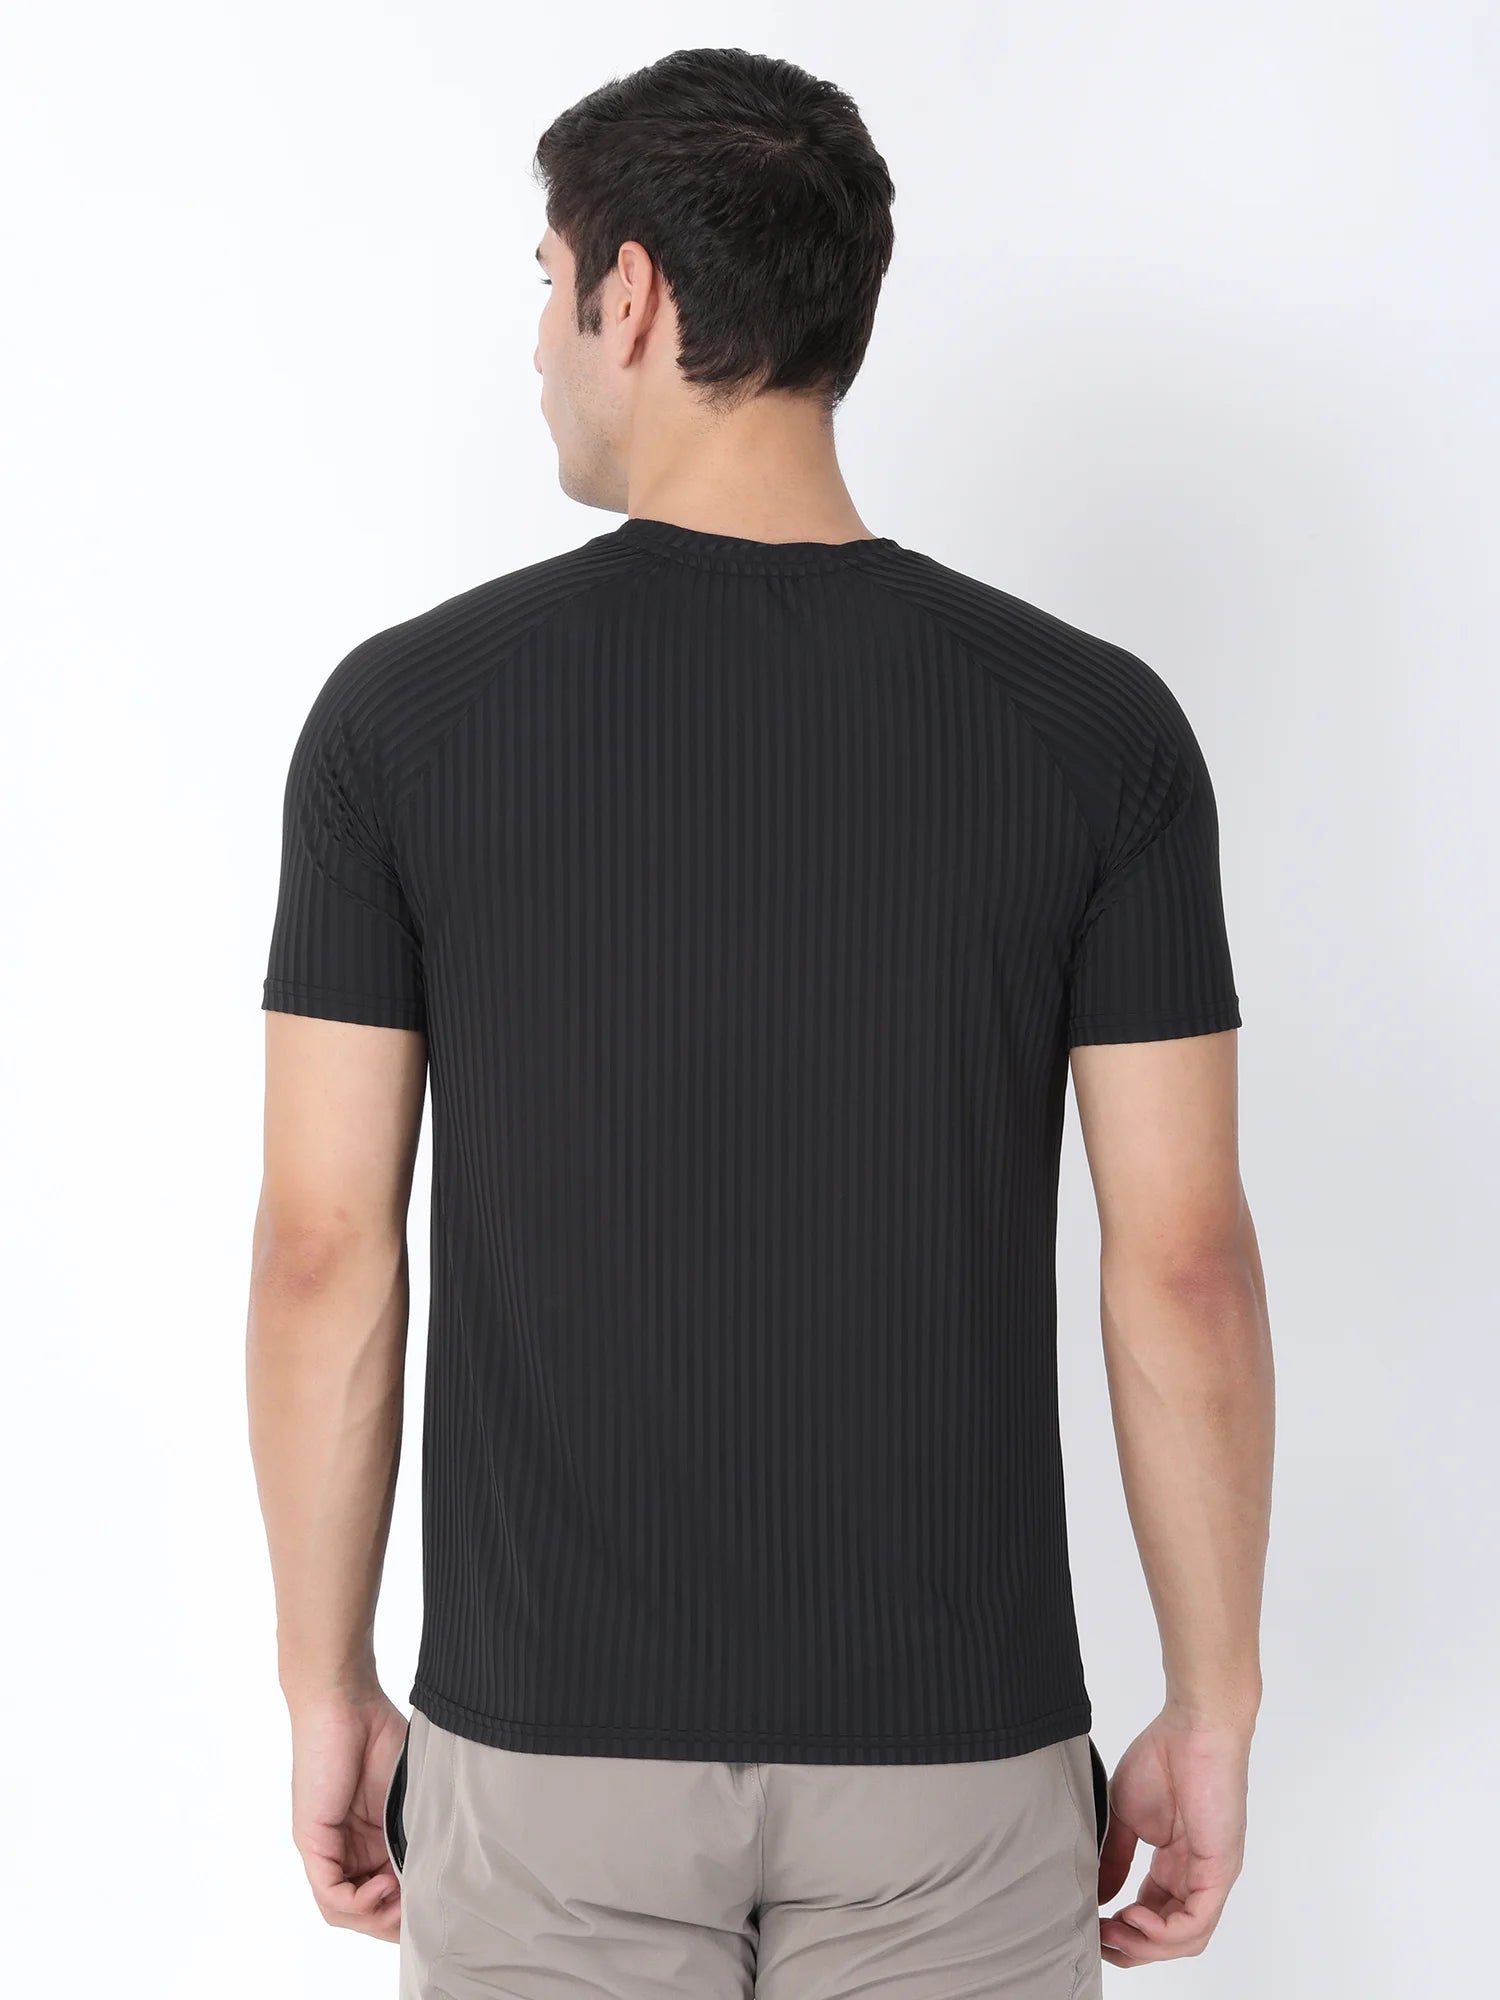 Jeffa Fit Fusion Nylon T-shirt in Black